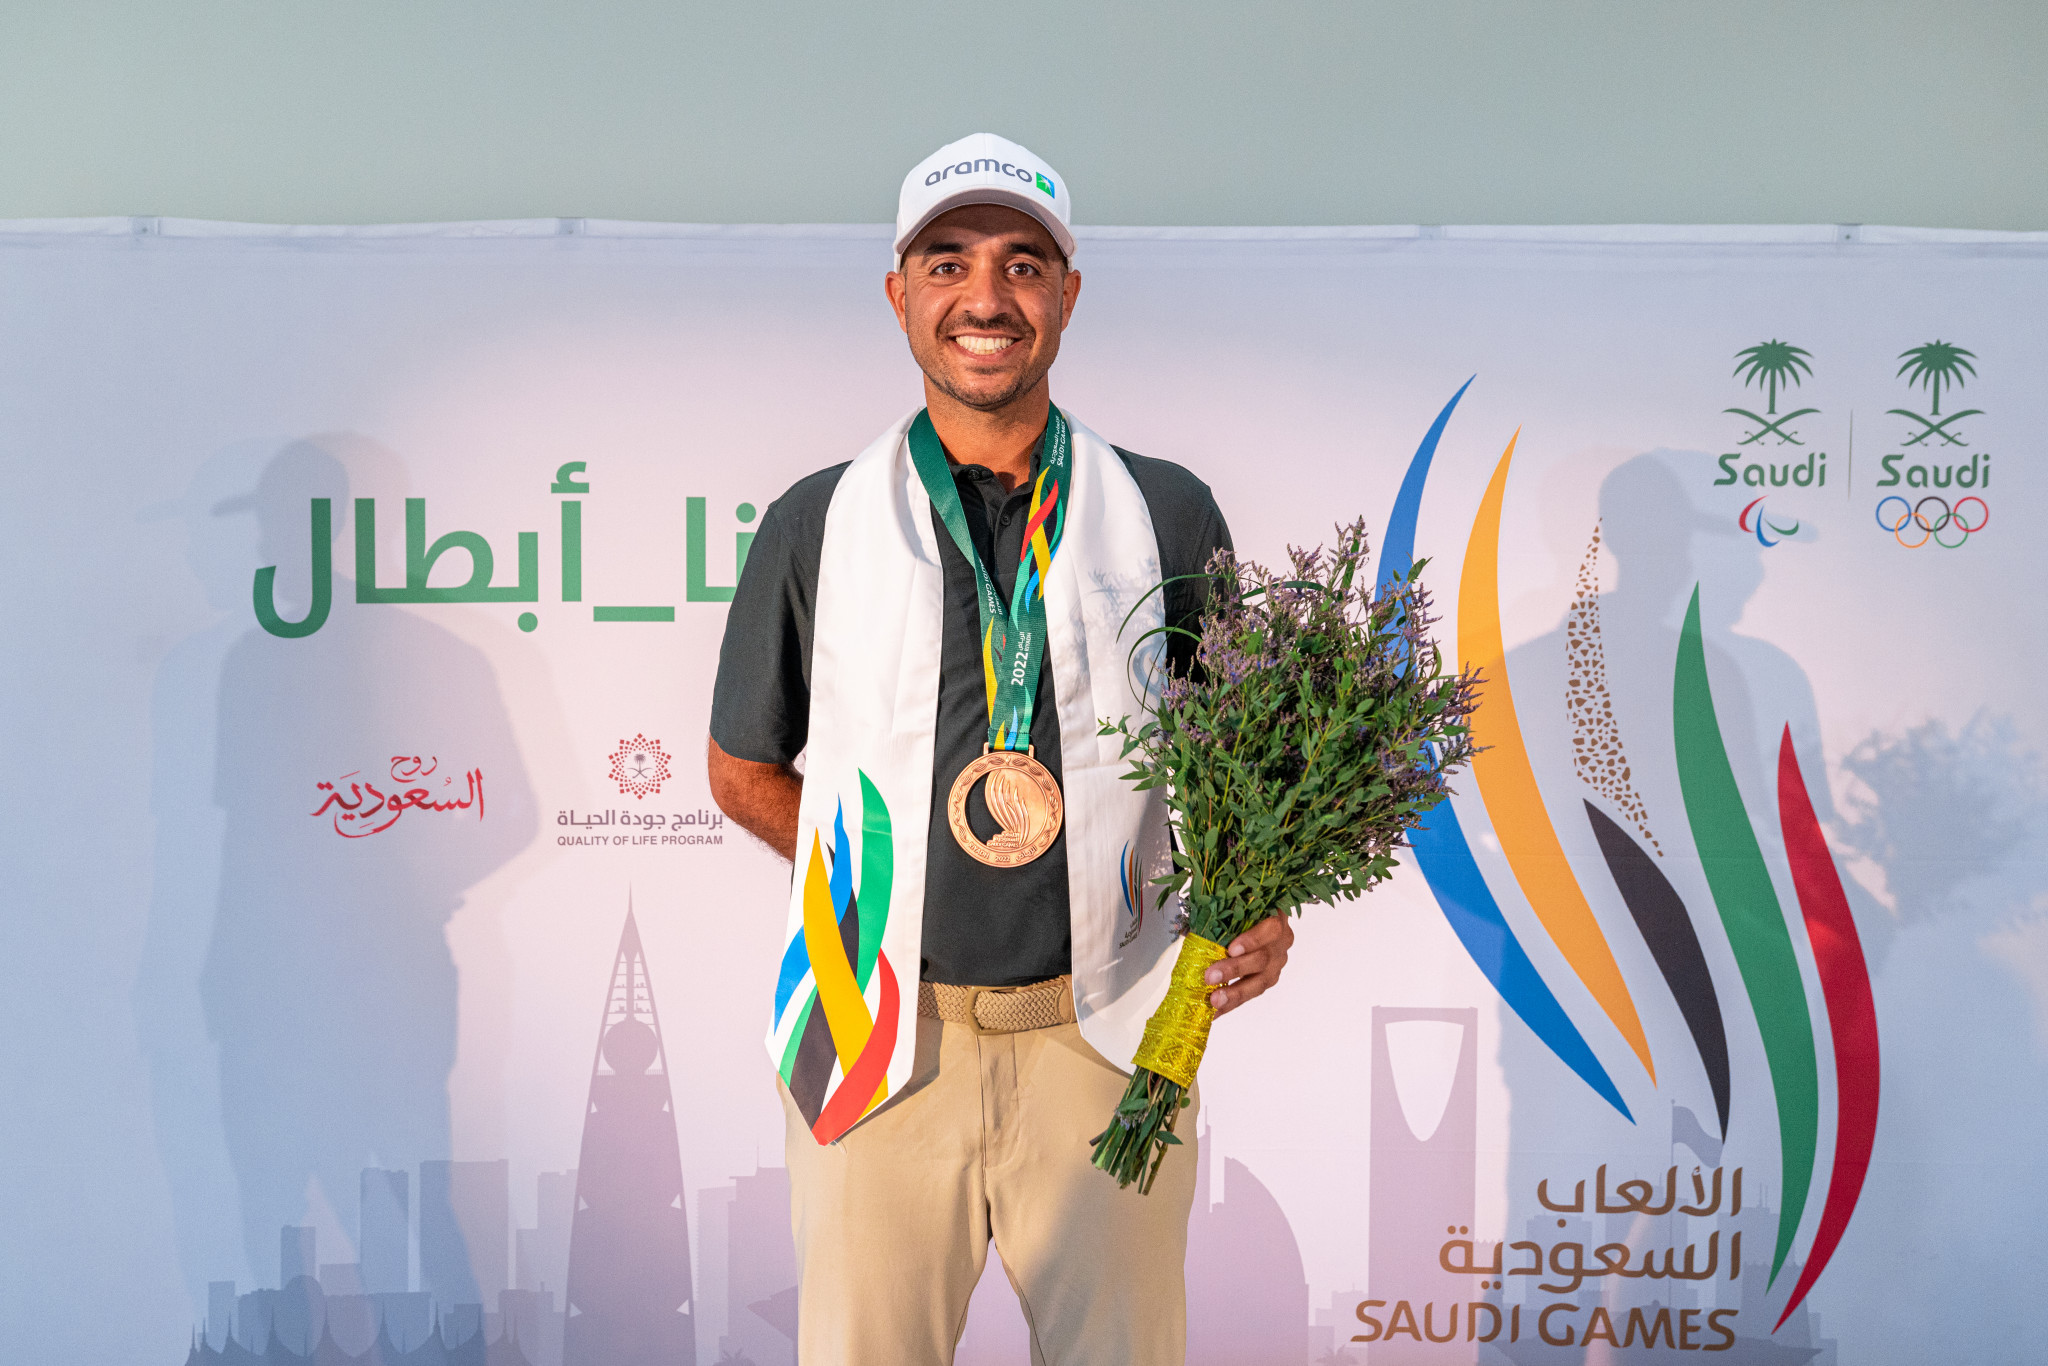 Othman Al-Mulla won a bronze medal at the Saudi Games ©Saudi Games